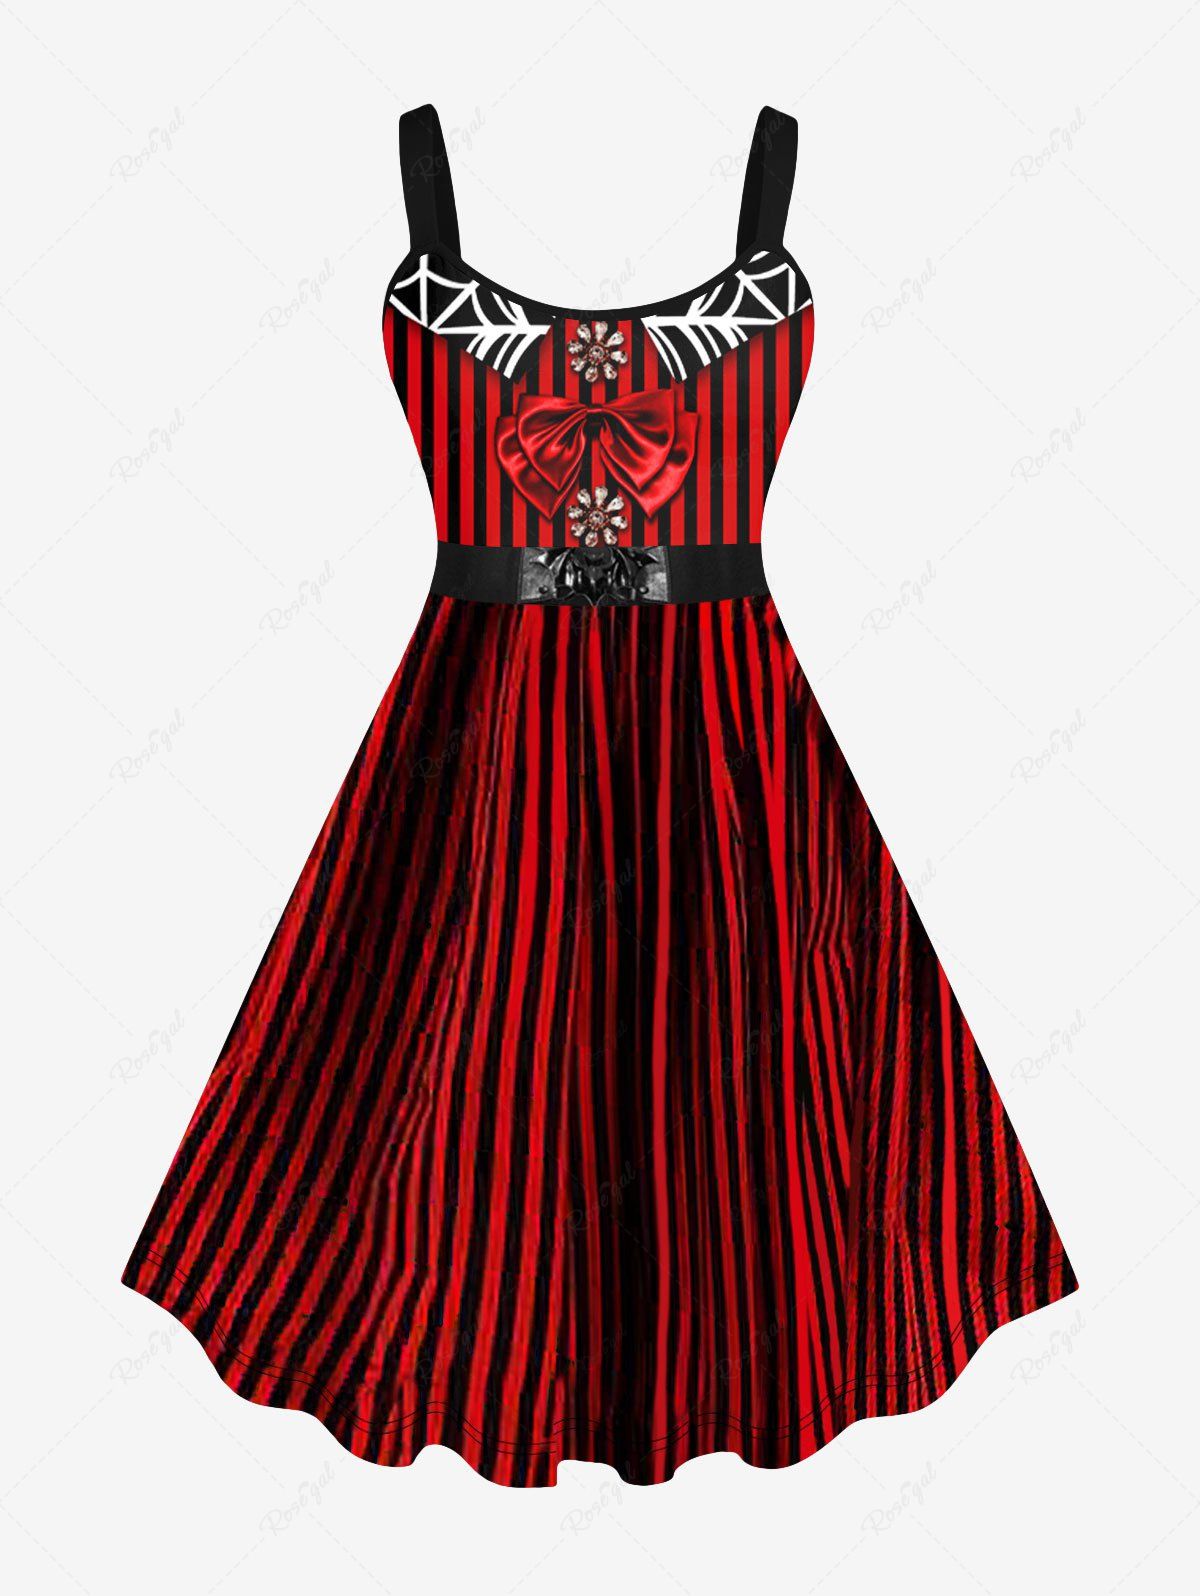 Hot Plus Size 3D Bowknot Striped Bat Belt Spider Web Print Halloween Tank Dress  